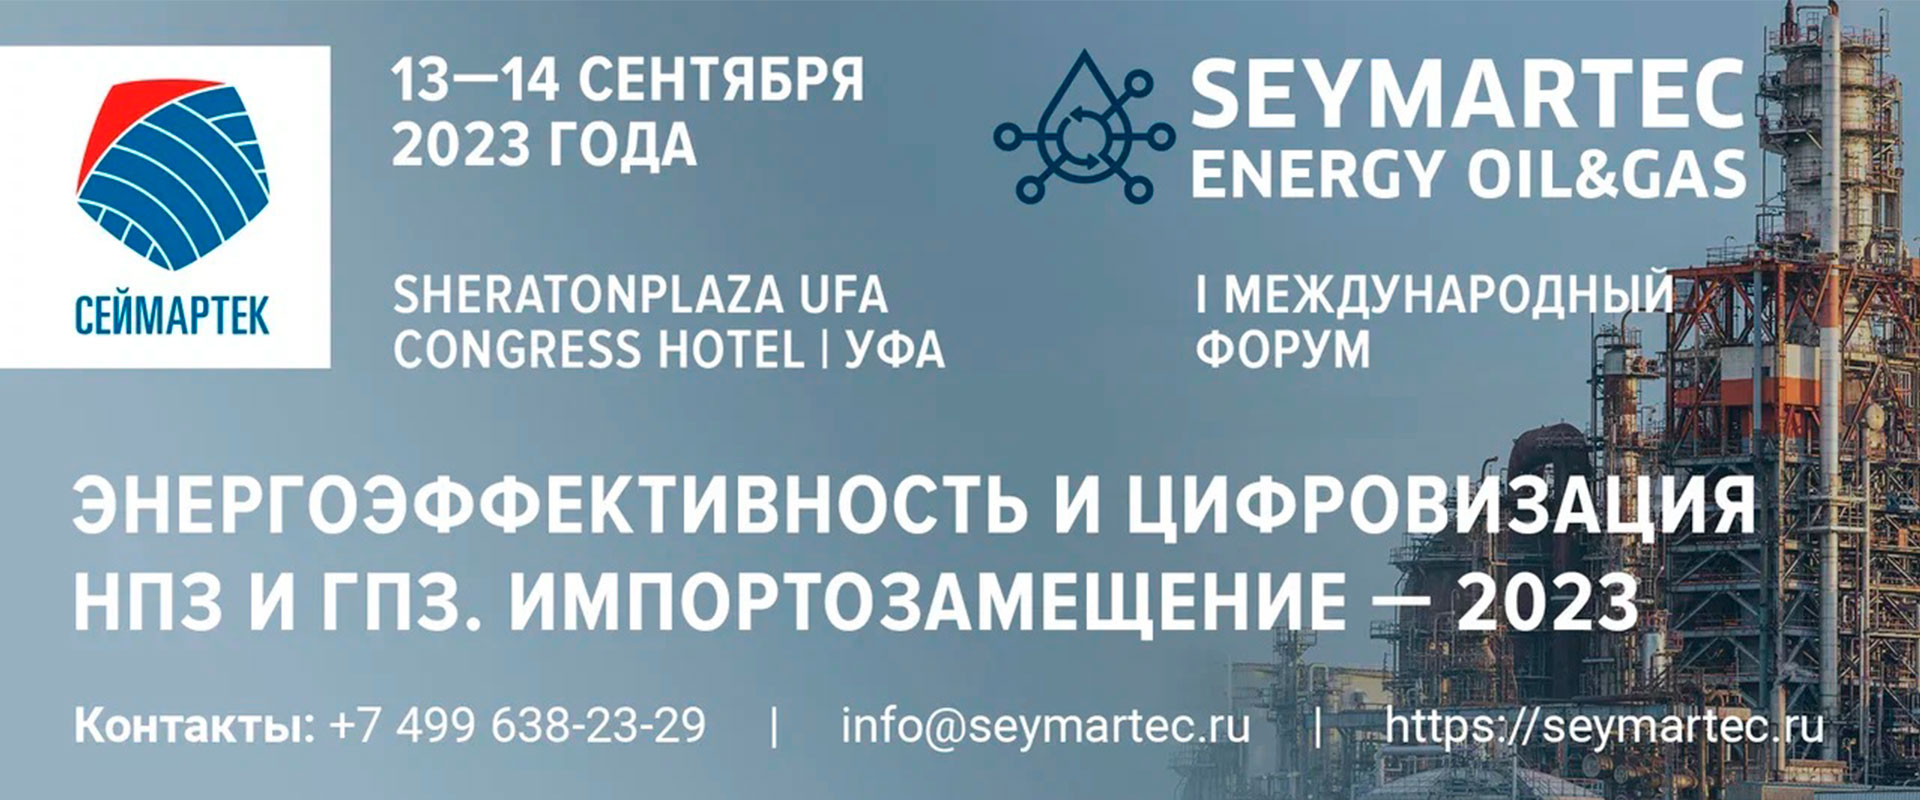 Форум Seymartec Energy Oil&Gas 2023